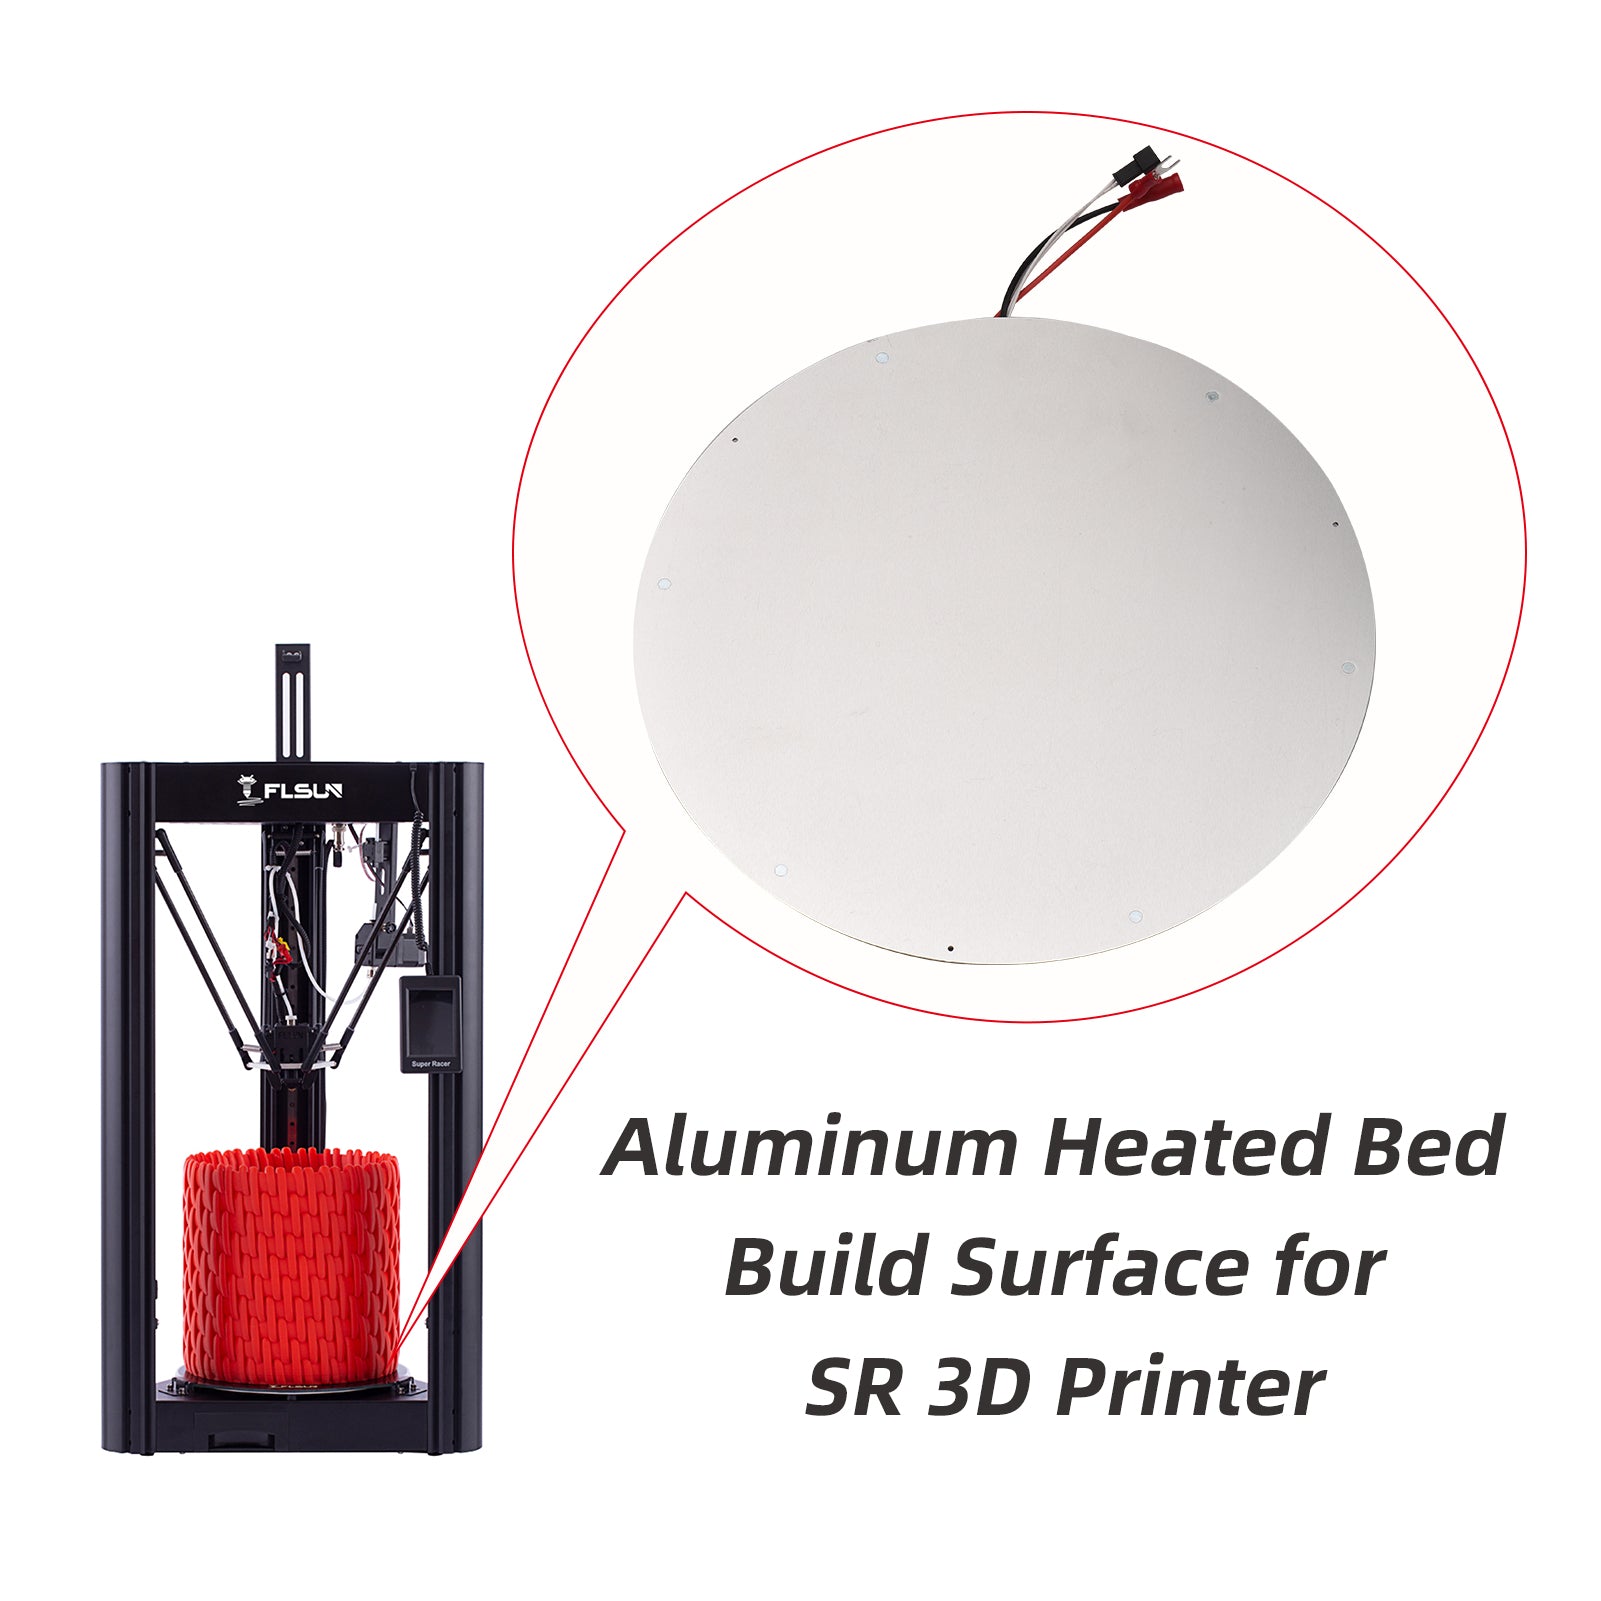 FLSUN SR 3D Printer Aluminum Heated Bed Build Surface Heat Bed 3D Printer Upgraded Parts